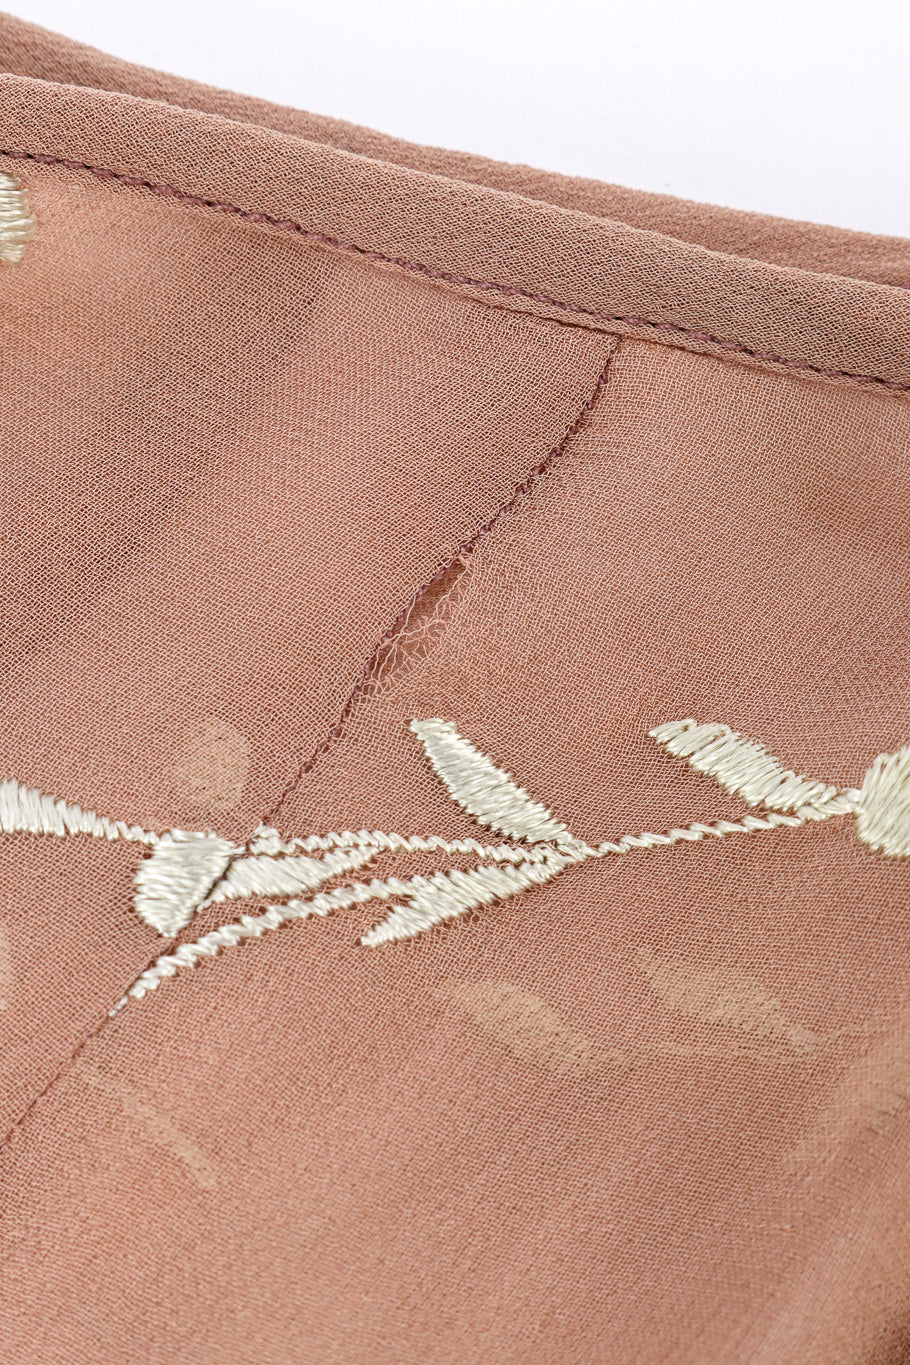 Vintage chiffon embroidered skirt small tear @recessla